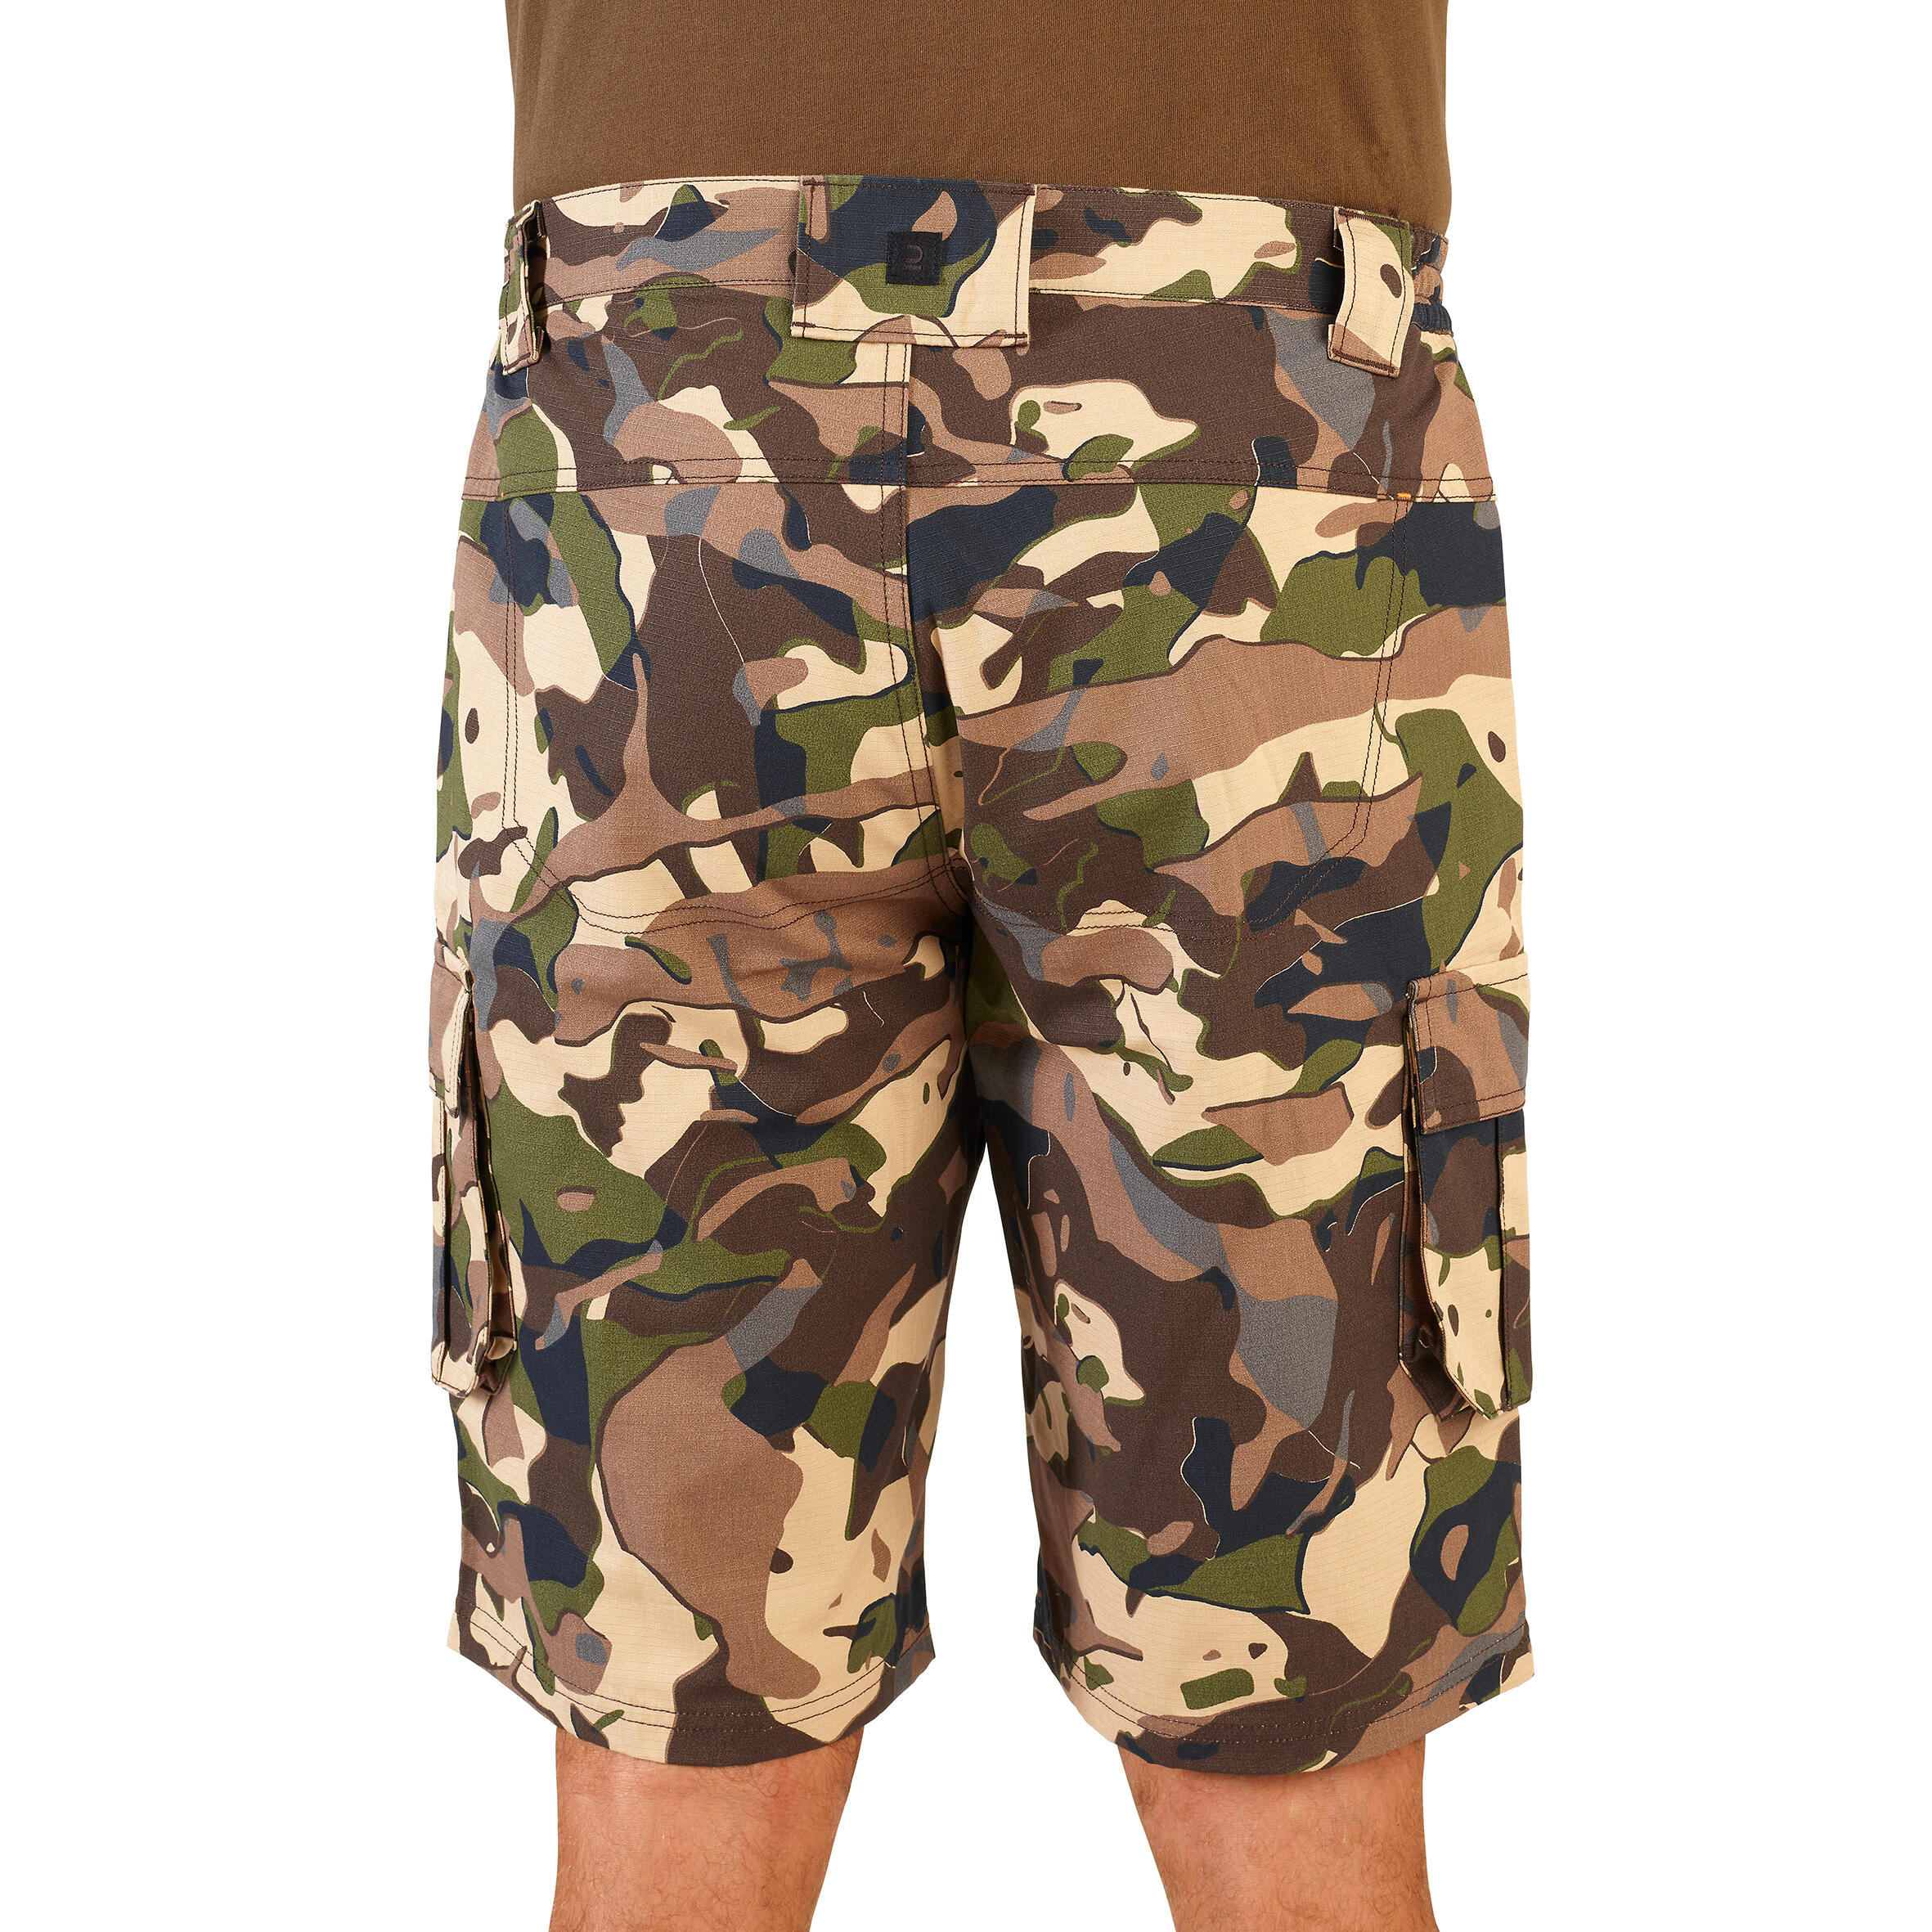 Bermuda shorts 500 - Woodland V1 brown LTD camouflage 4/10